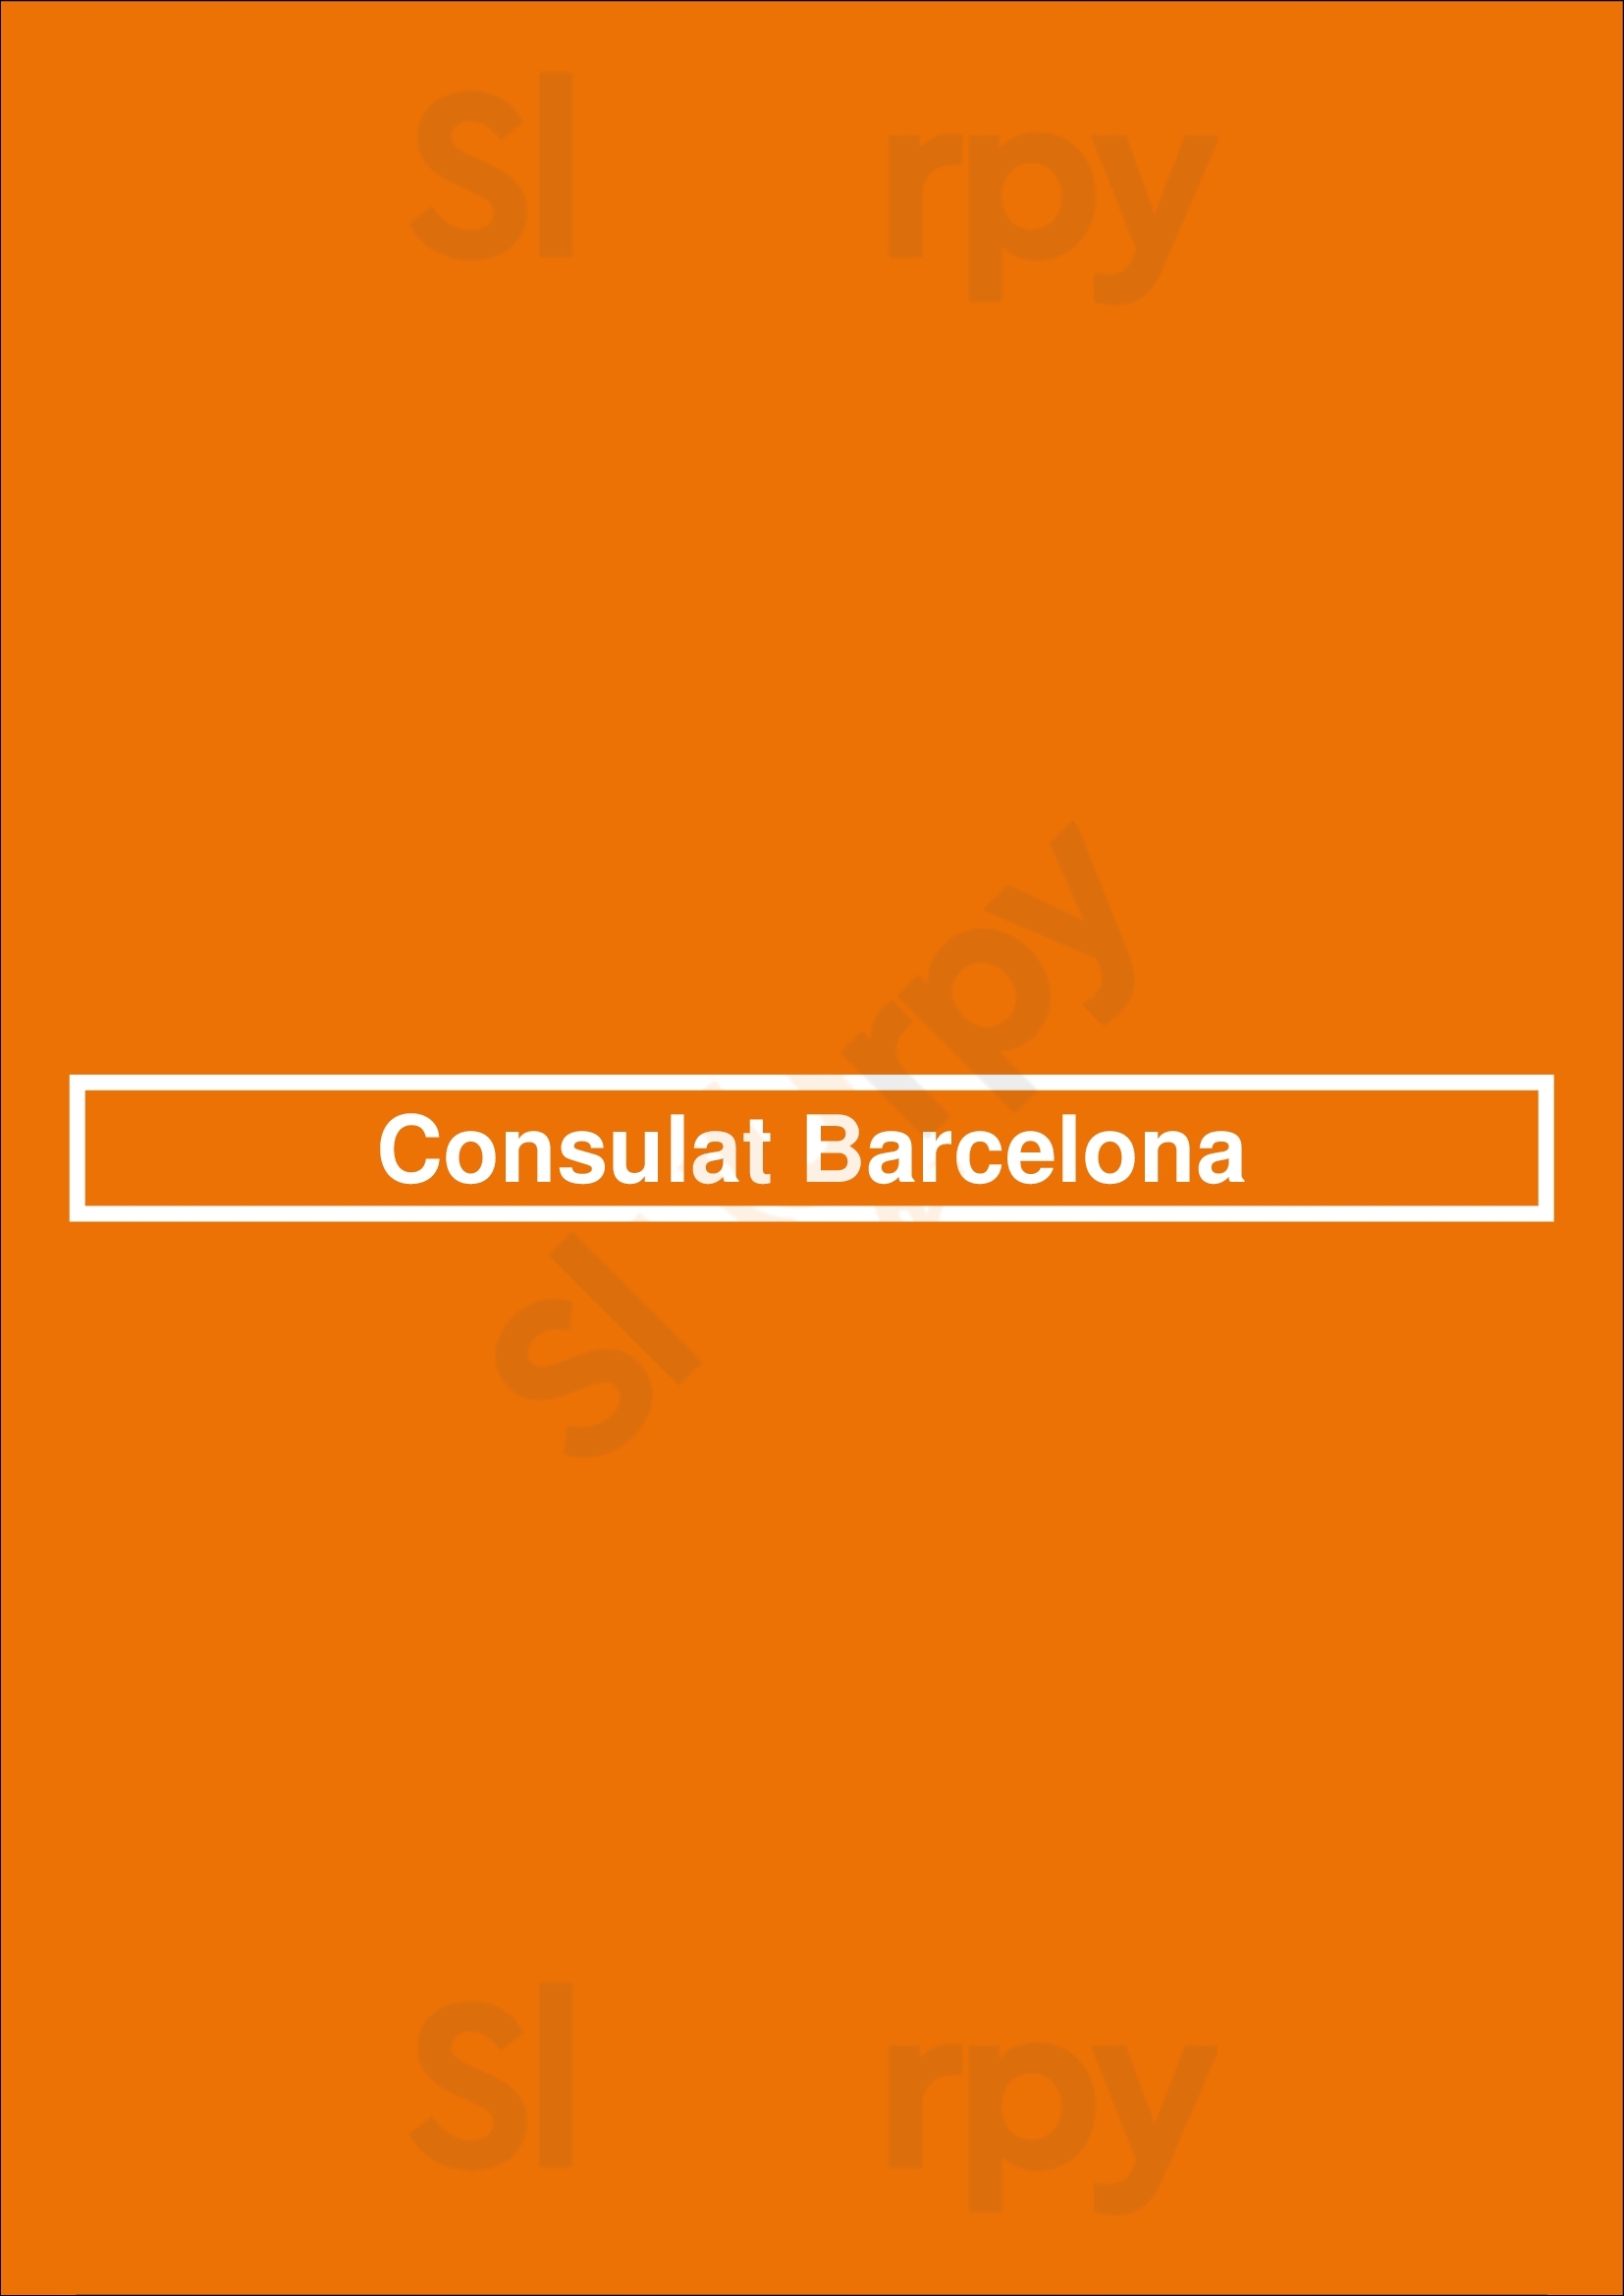 Consulat Barcelona Barcelona Menu - 1